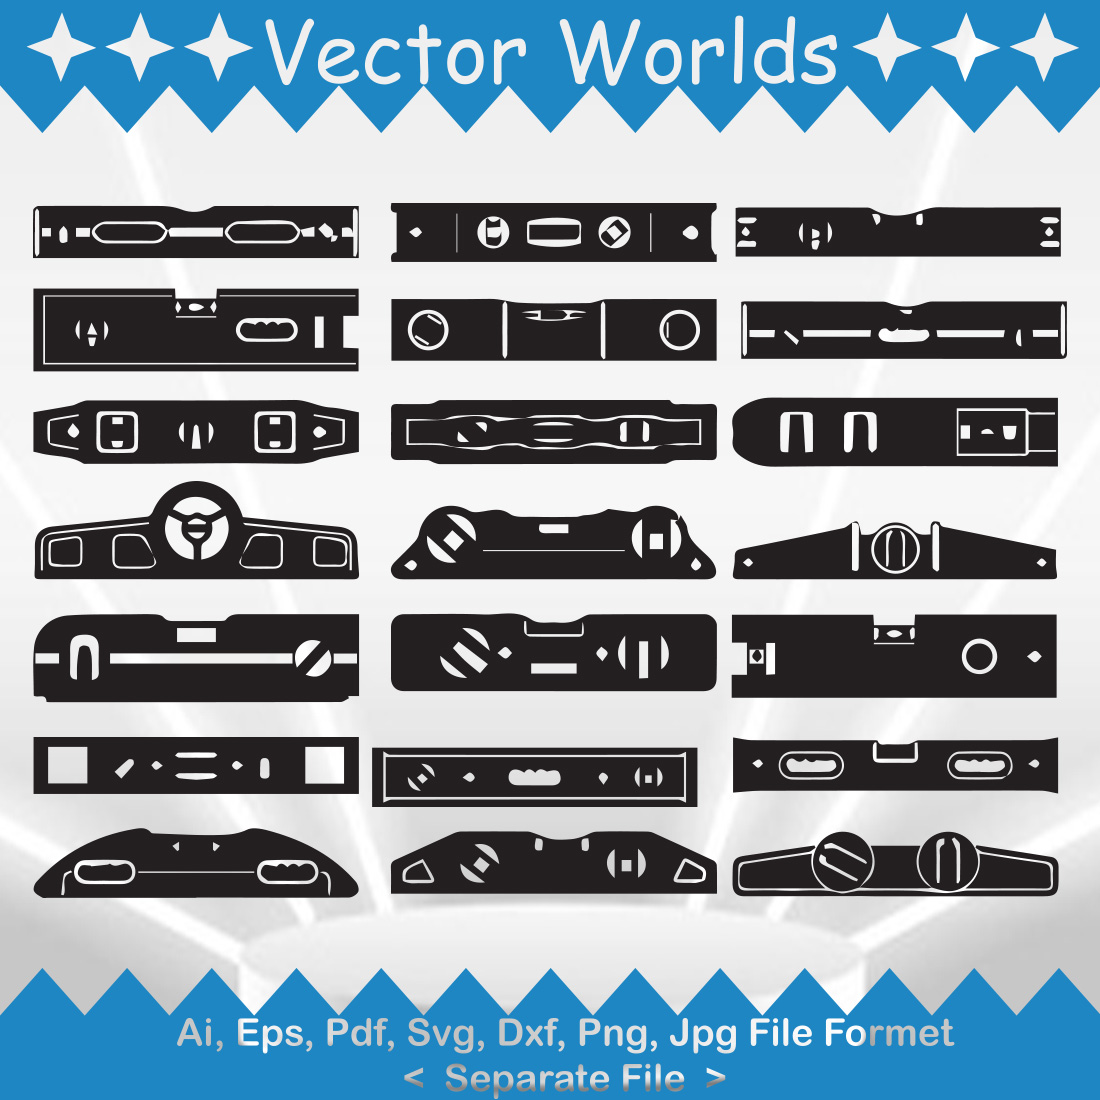 Spirit Level SVG Vector Design cover image.